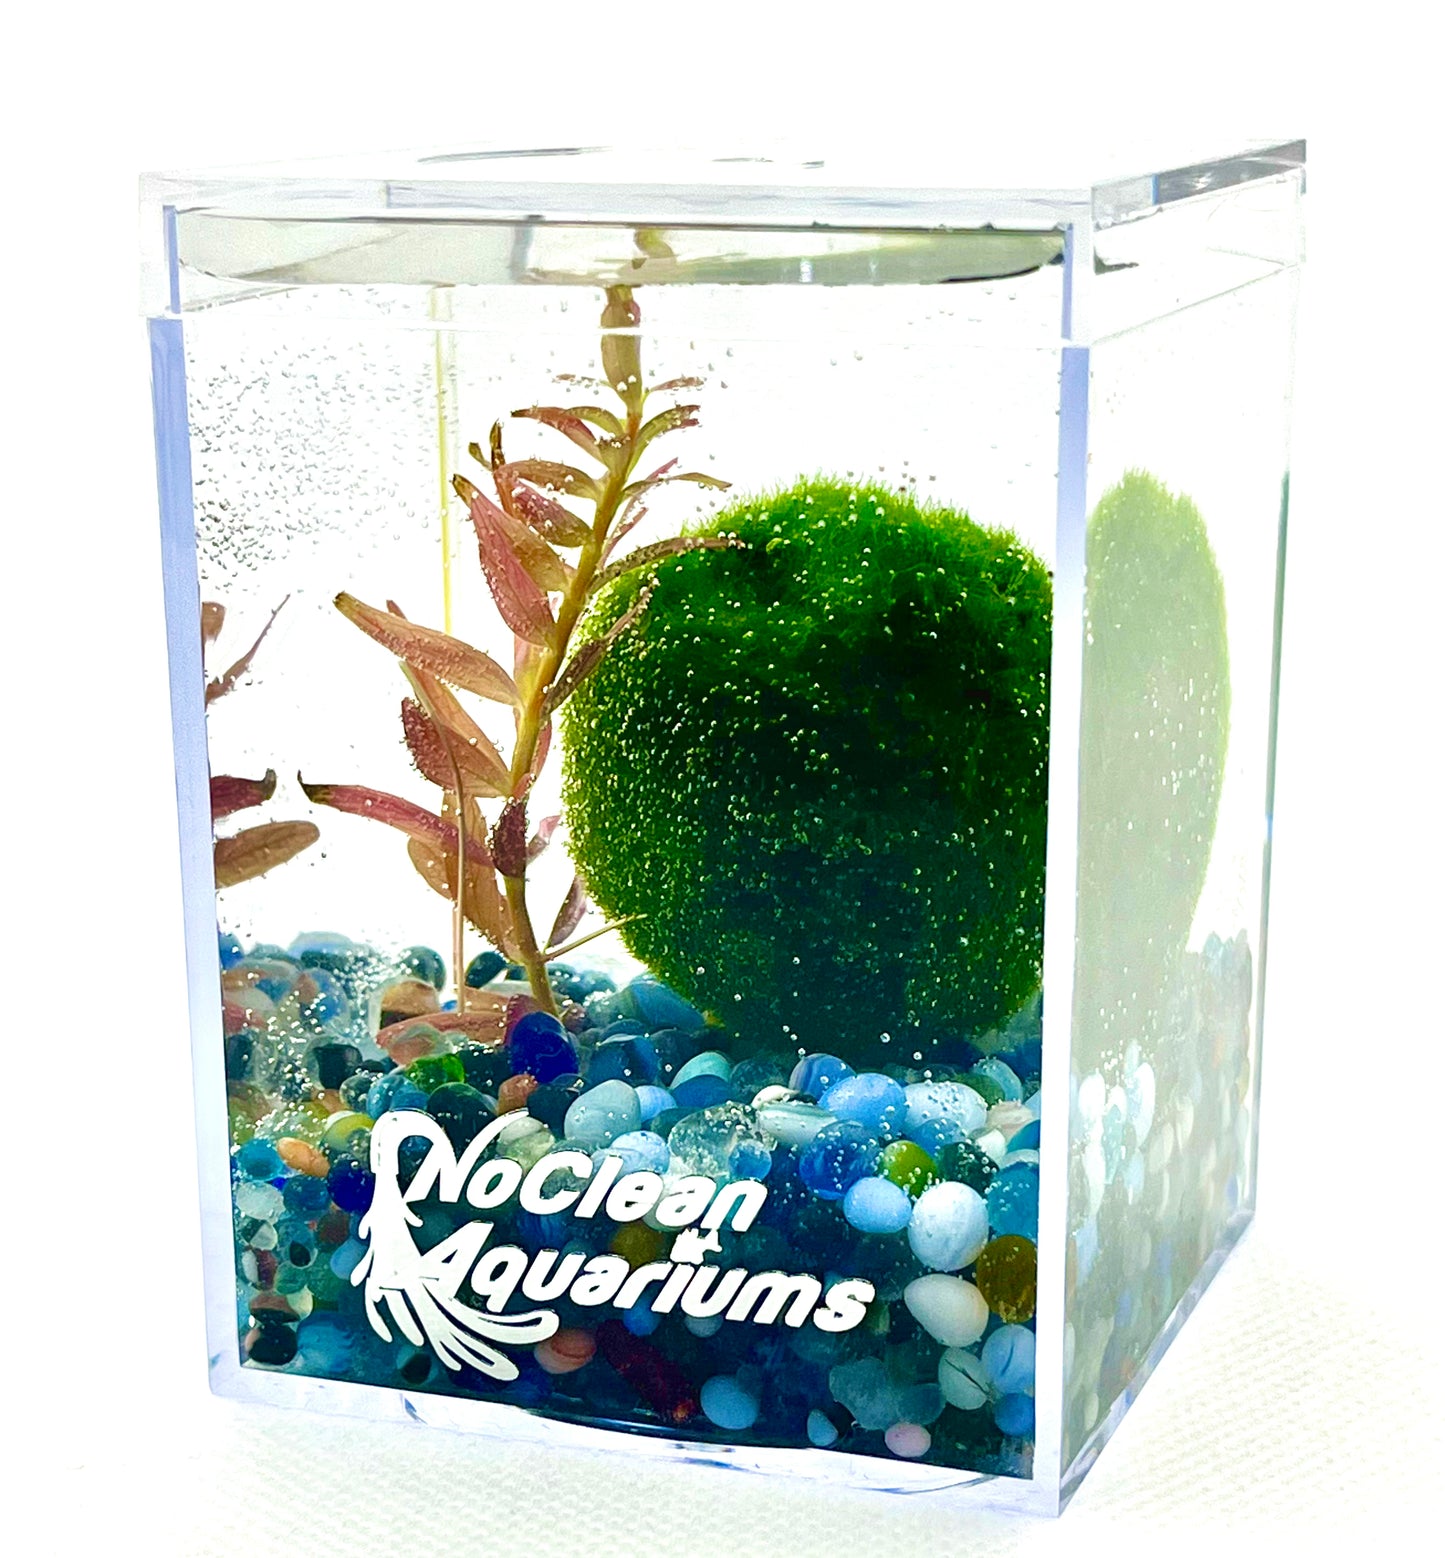 1 Live Marimo Moss Ball | Aquarium Decoration | Not Fake | Farm Grown Indoors